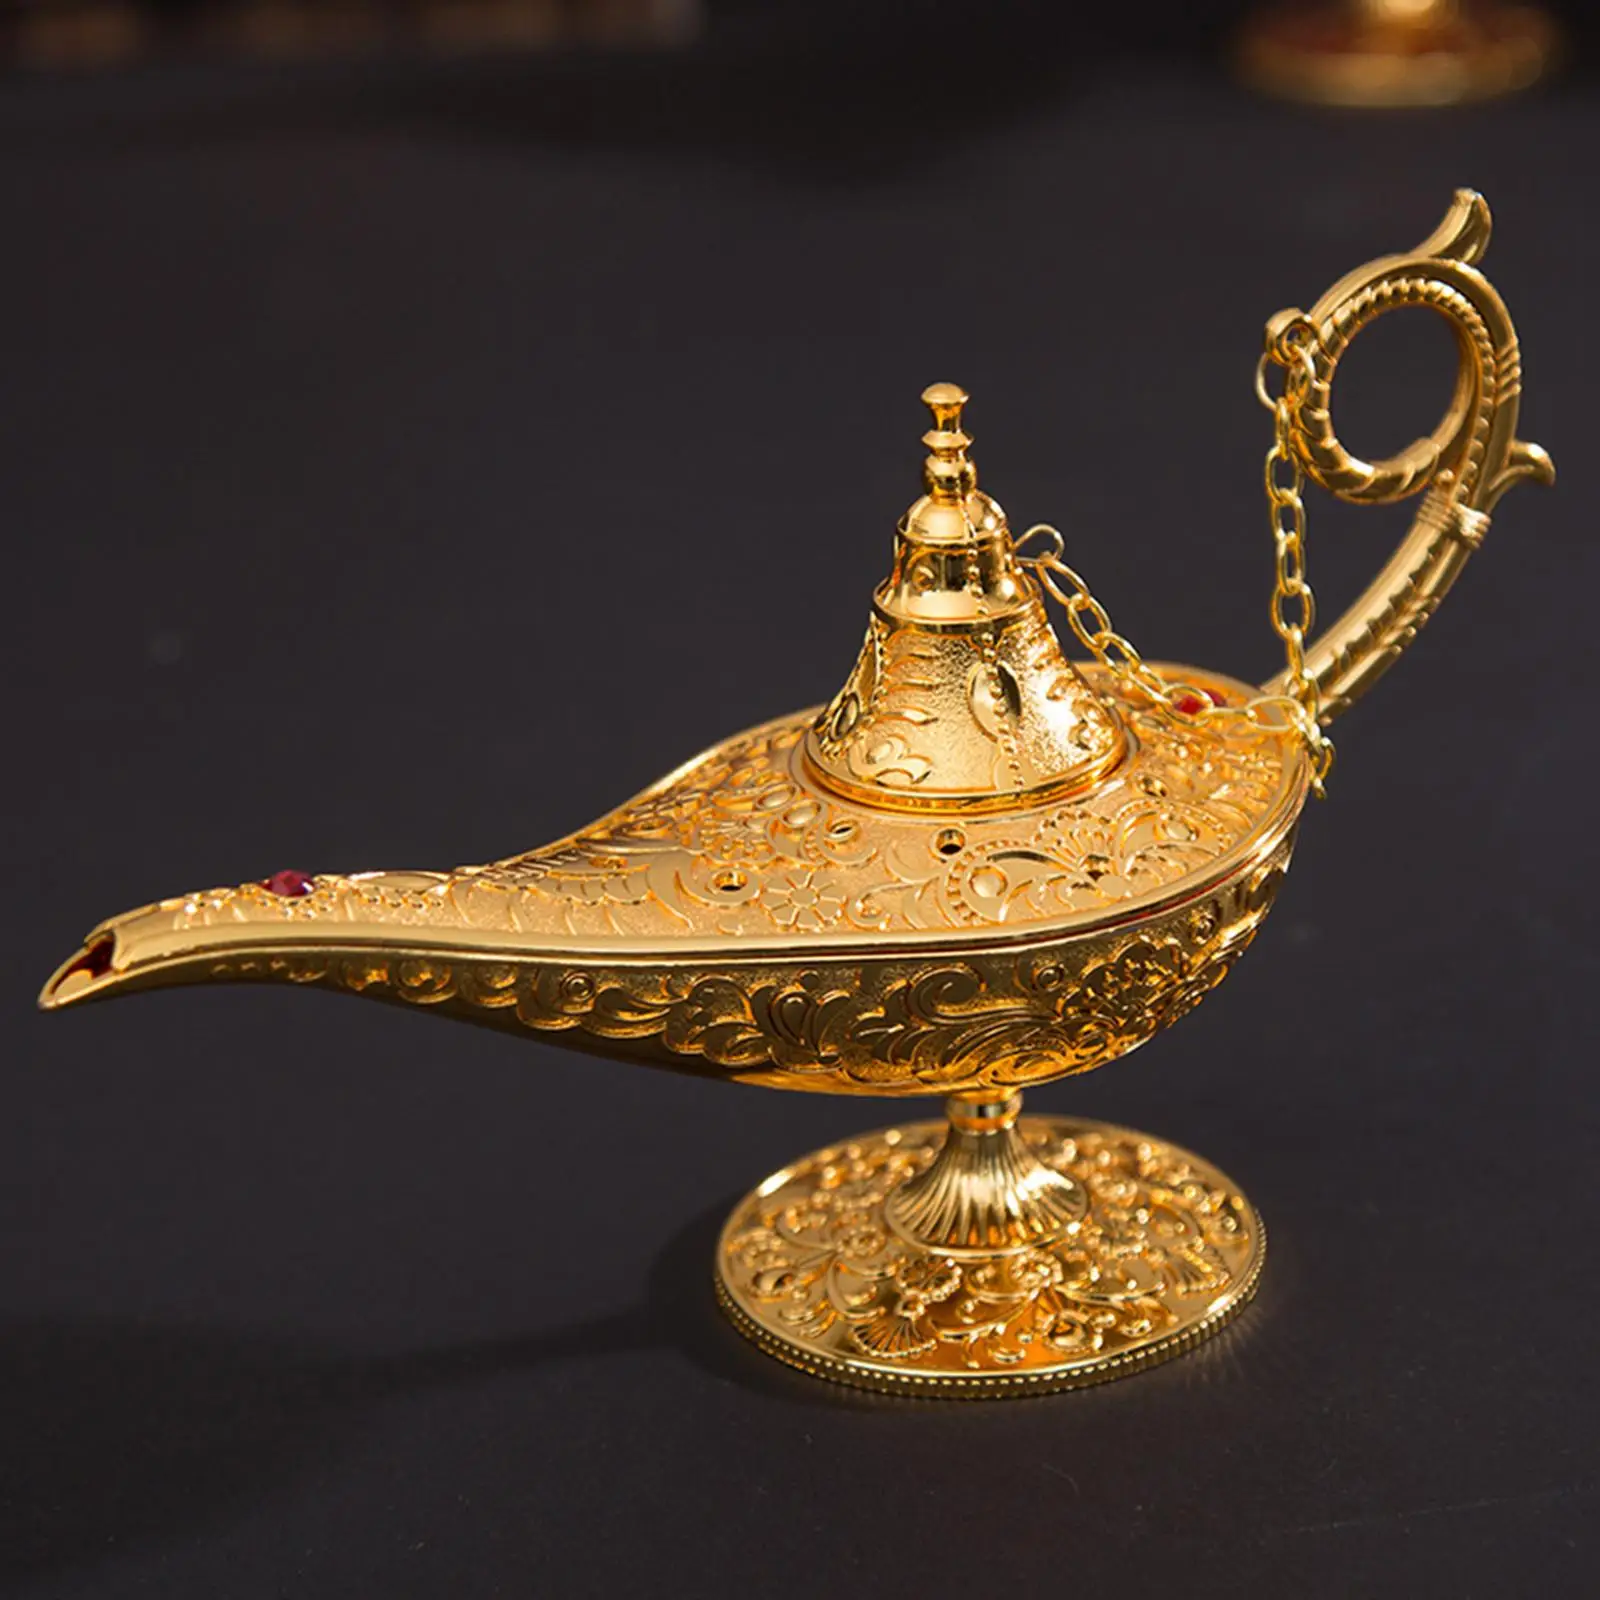 Metal  Lamp Wishing   Art Ornately Embossed for Party Halloween Birthday  Fairy Tale Tea Pot Gift